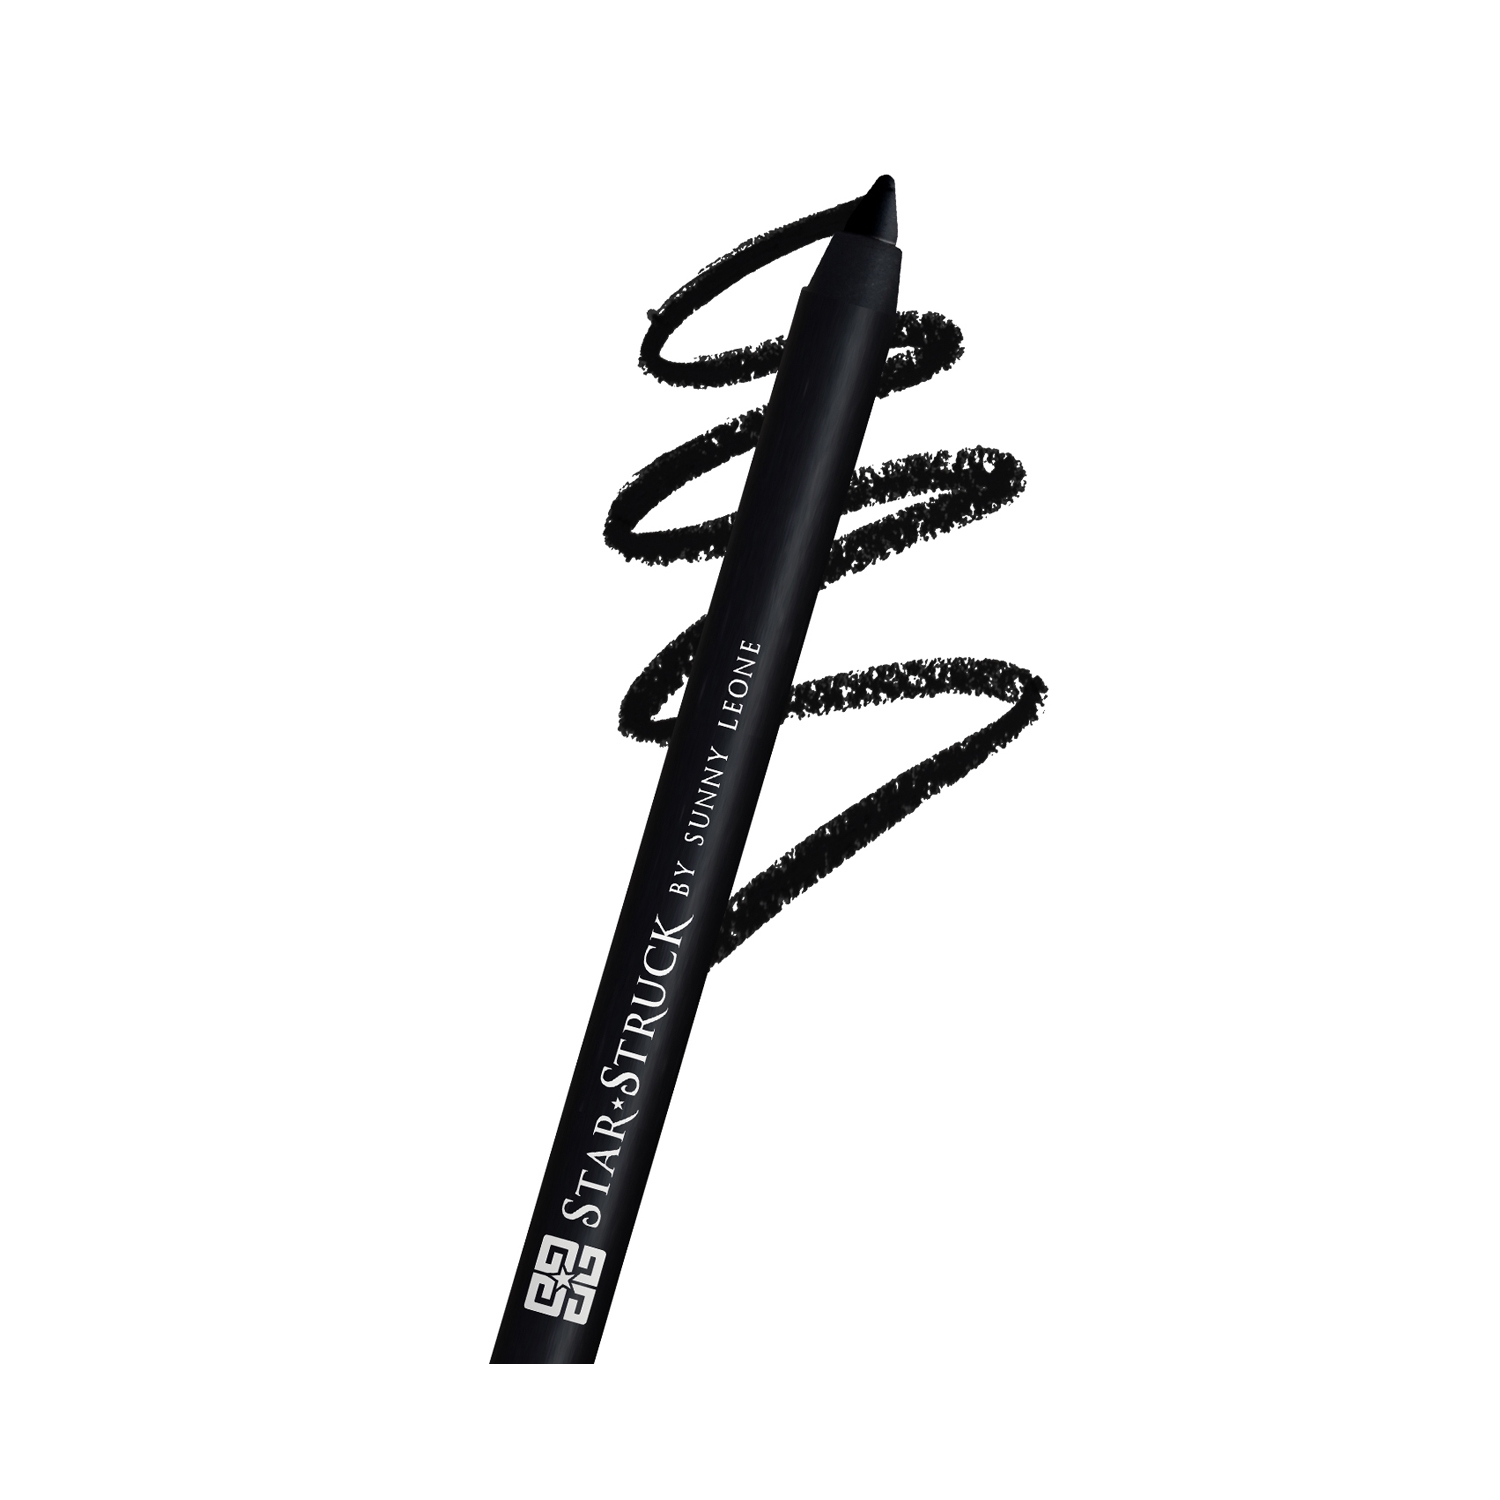 Star Struck by Sunny Leone | Star Struck by Sunny Leone Kohl Eye Liner Pencil - Black (1.2g)